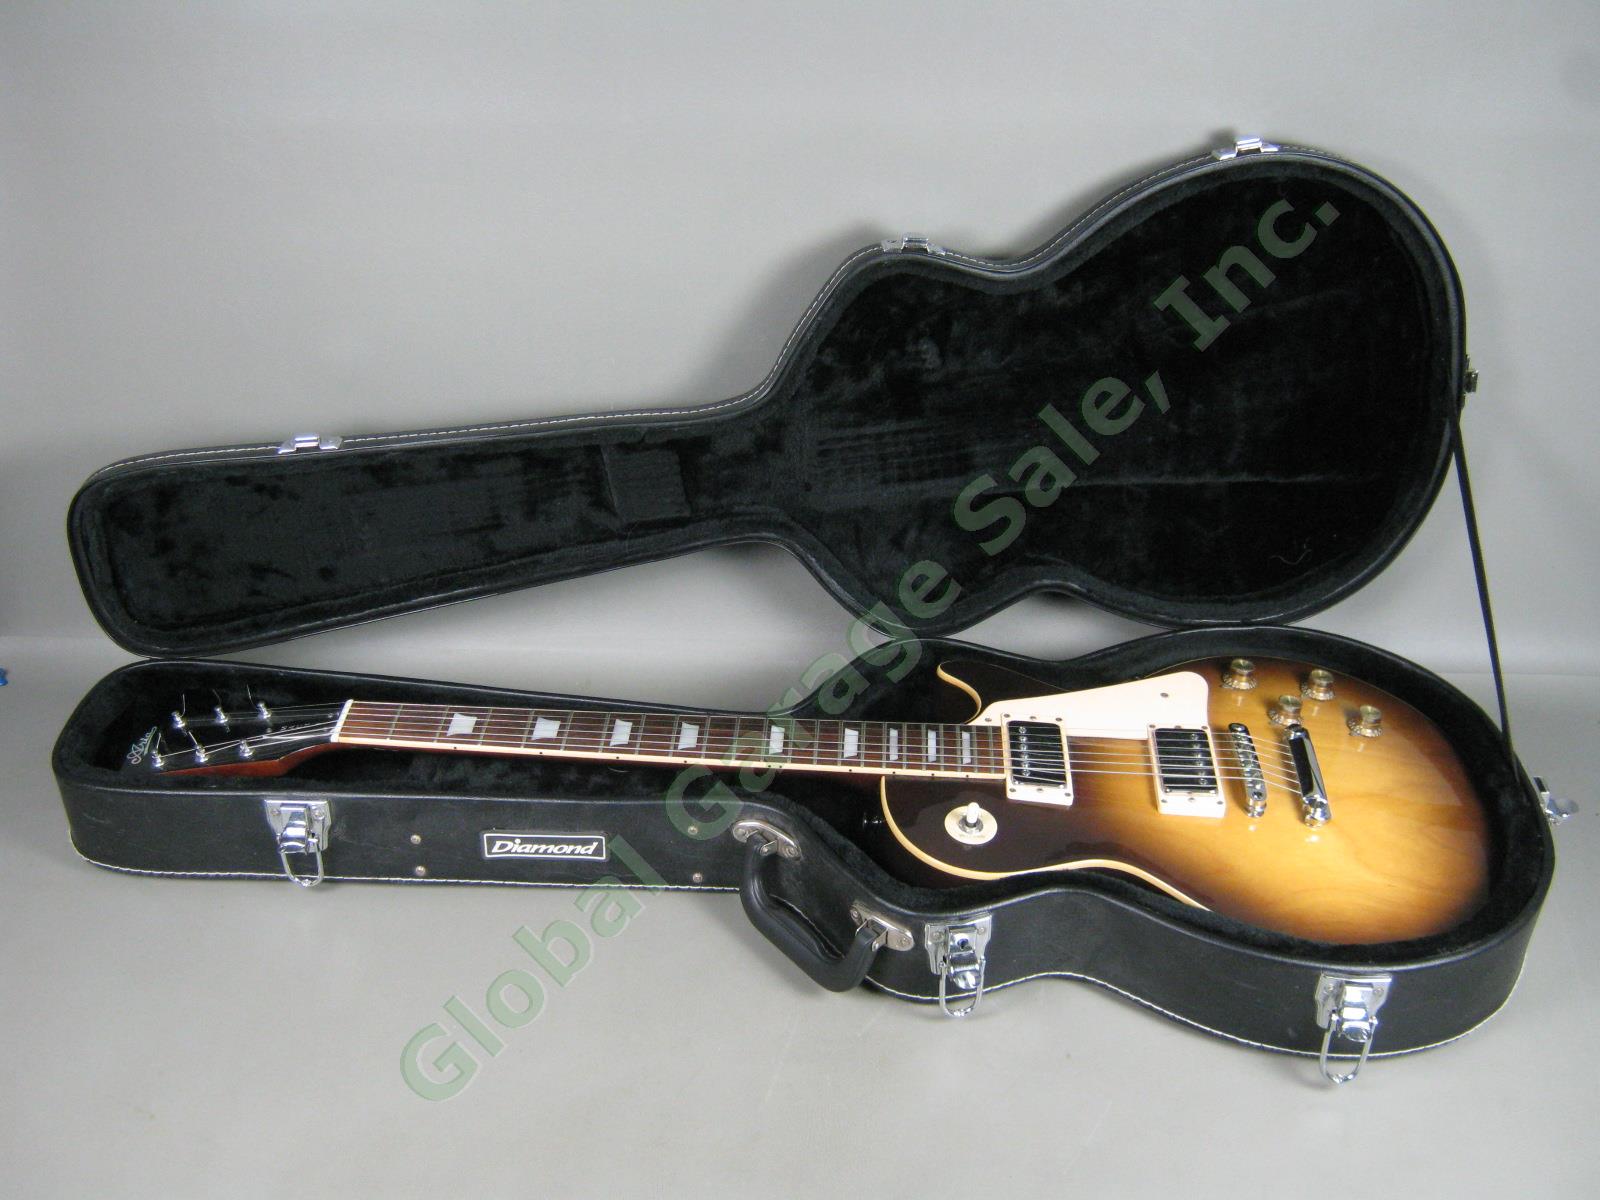 Vtg Matsumoku Aria Mach 1 Les Paul Copy Electric Guitar MIJ Made in Japan NO RES